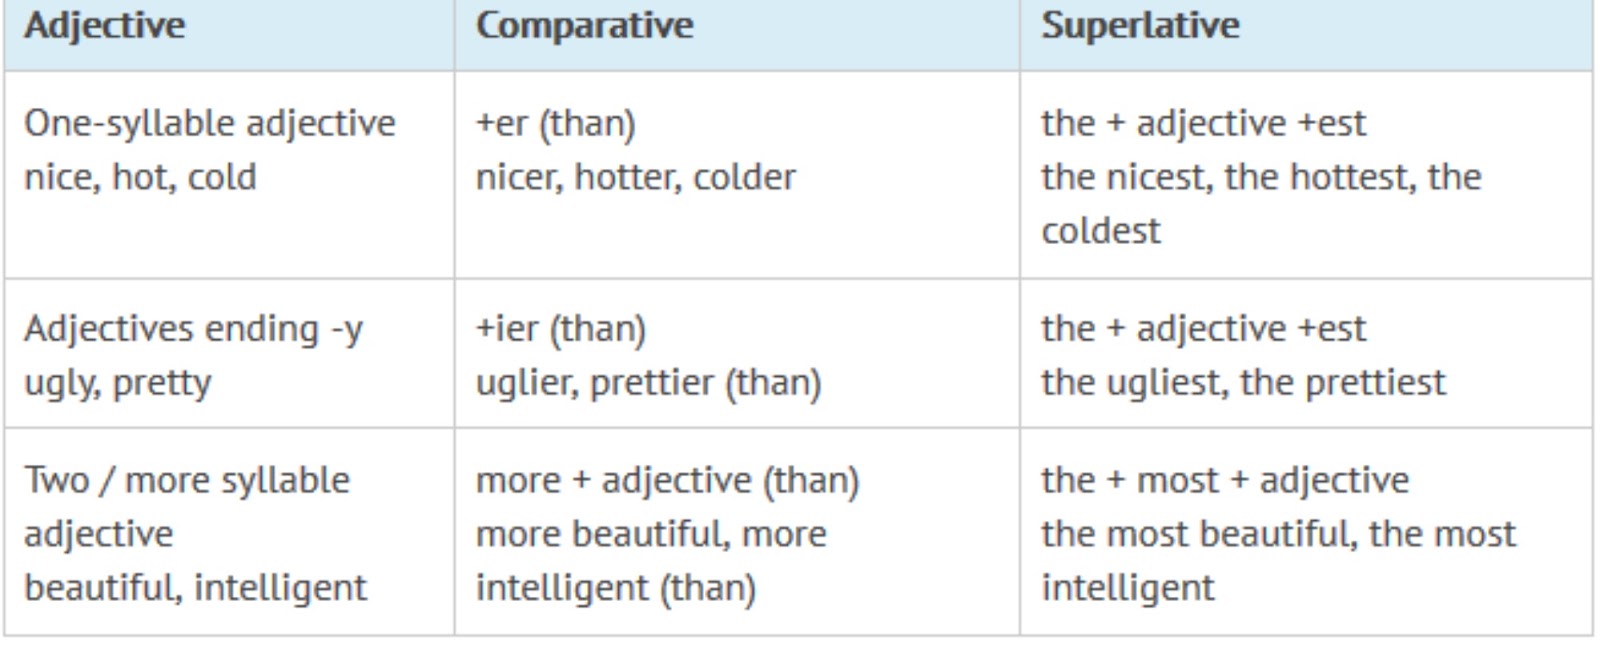 Comparative adjectives ответы. Comparatives and Superlatives. Comparative and Superlative adjectives исключения. Грамматика Comparatives. Comparatives and Superlatives исключения.